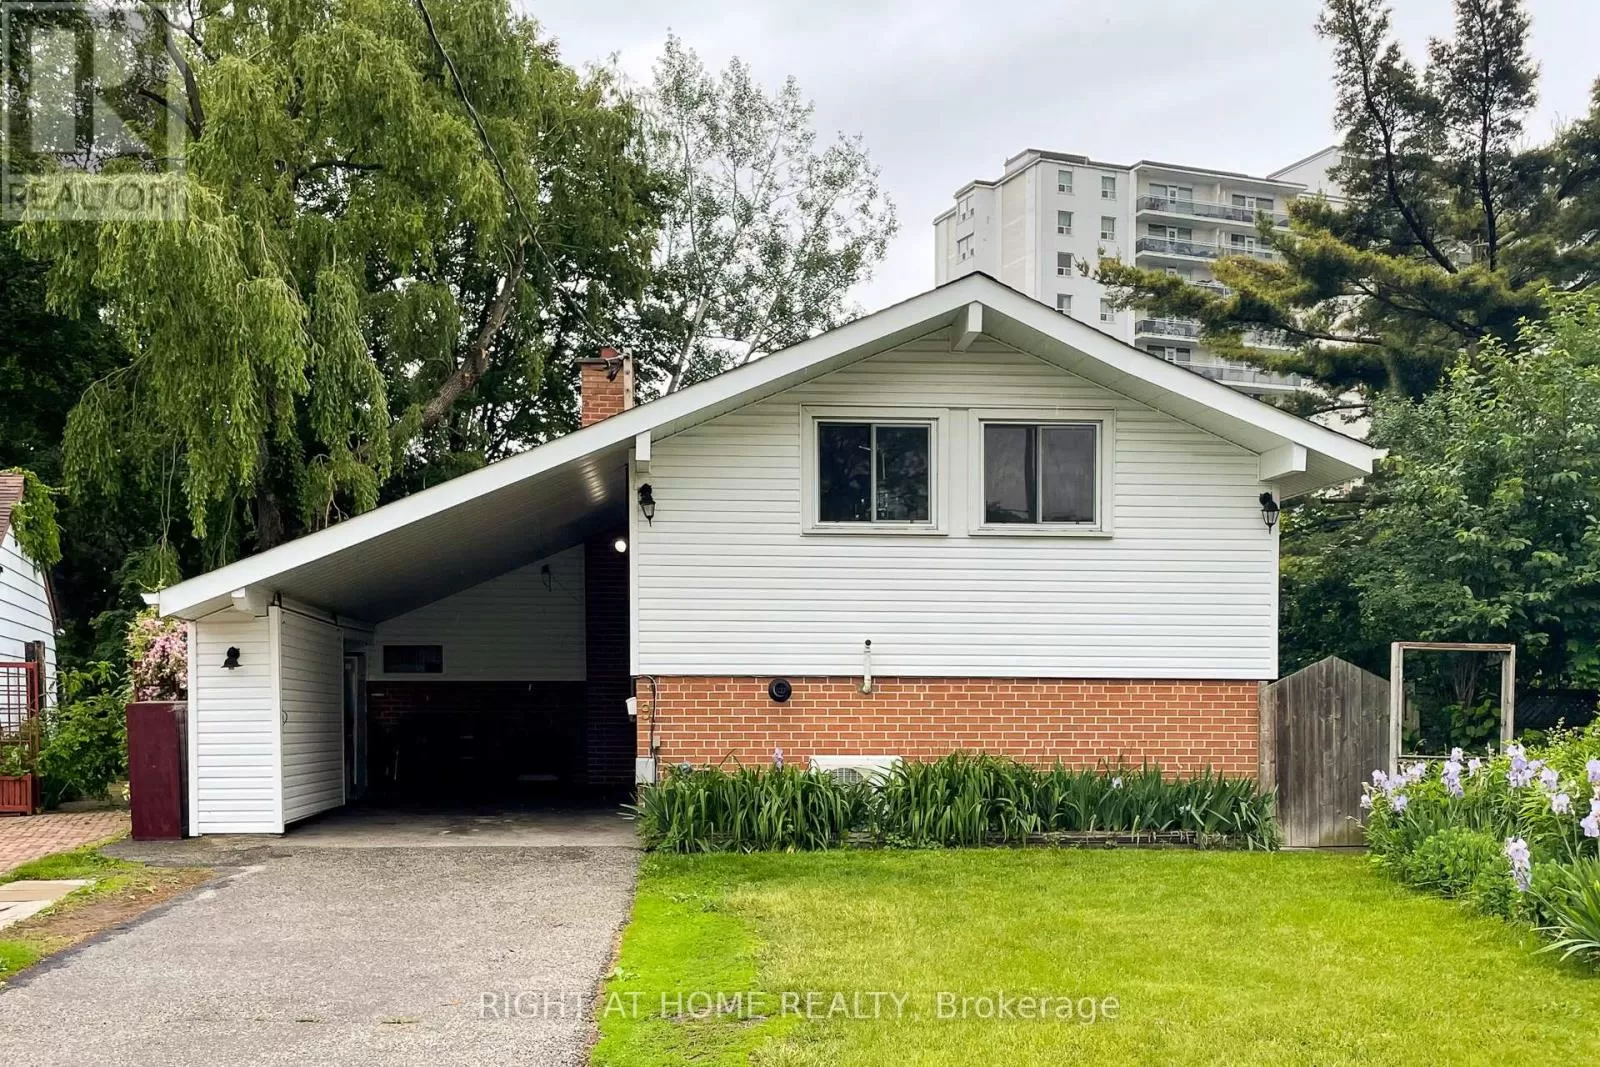 House for rent: 9 Ladysbridge Drive, Toronto, Ontario M1G 3H5